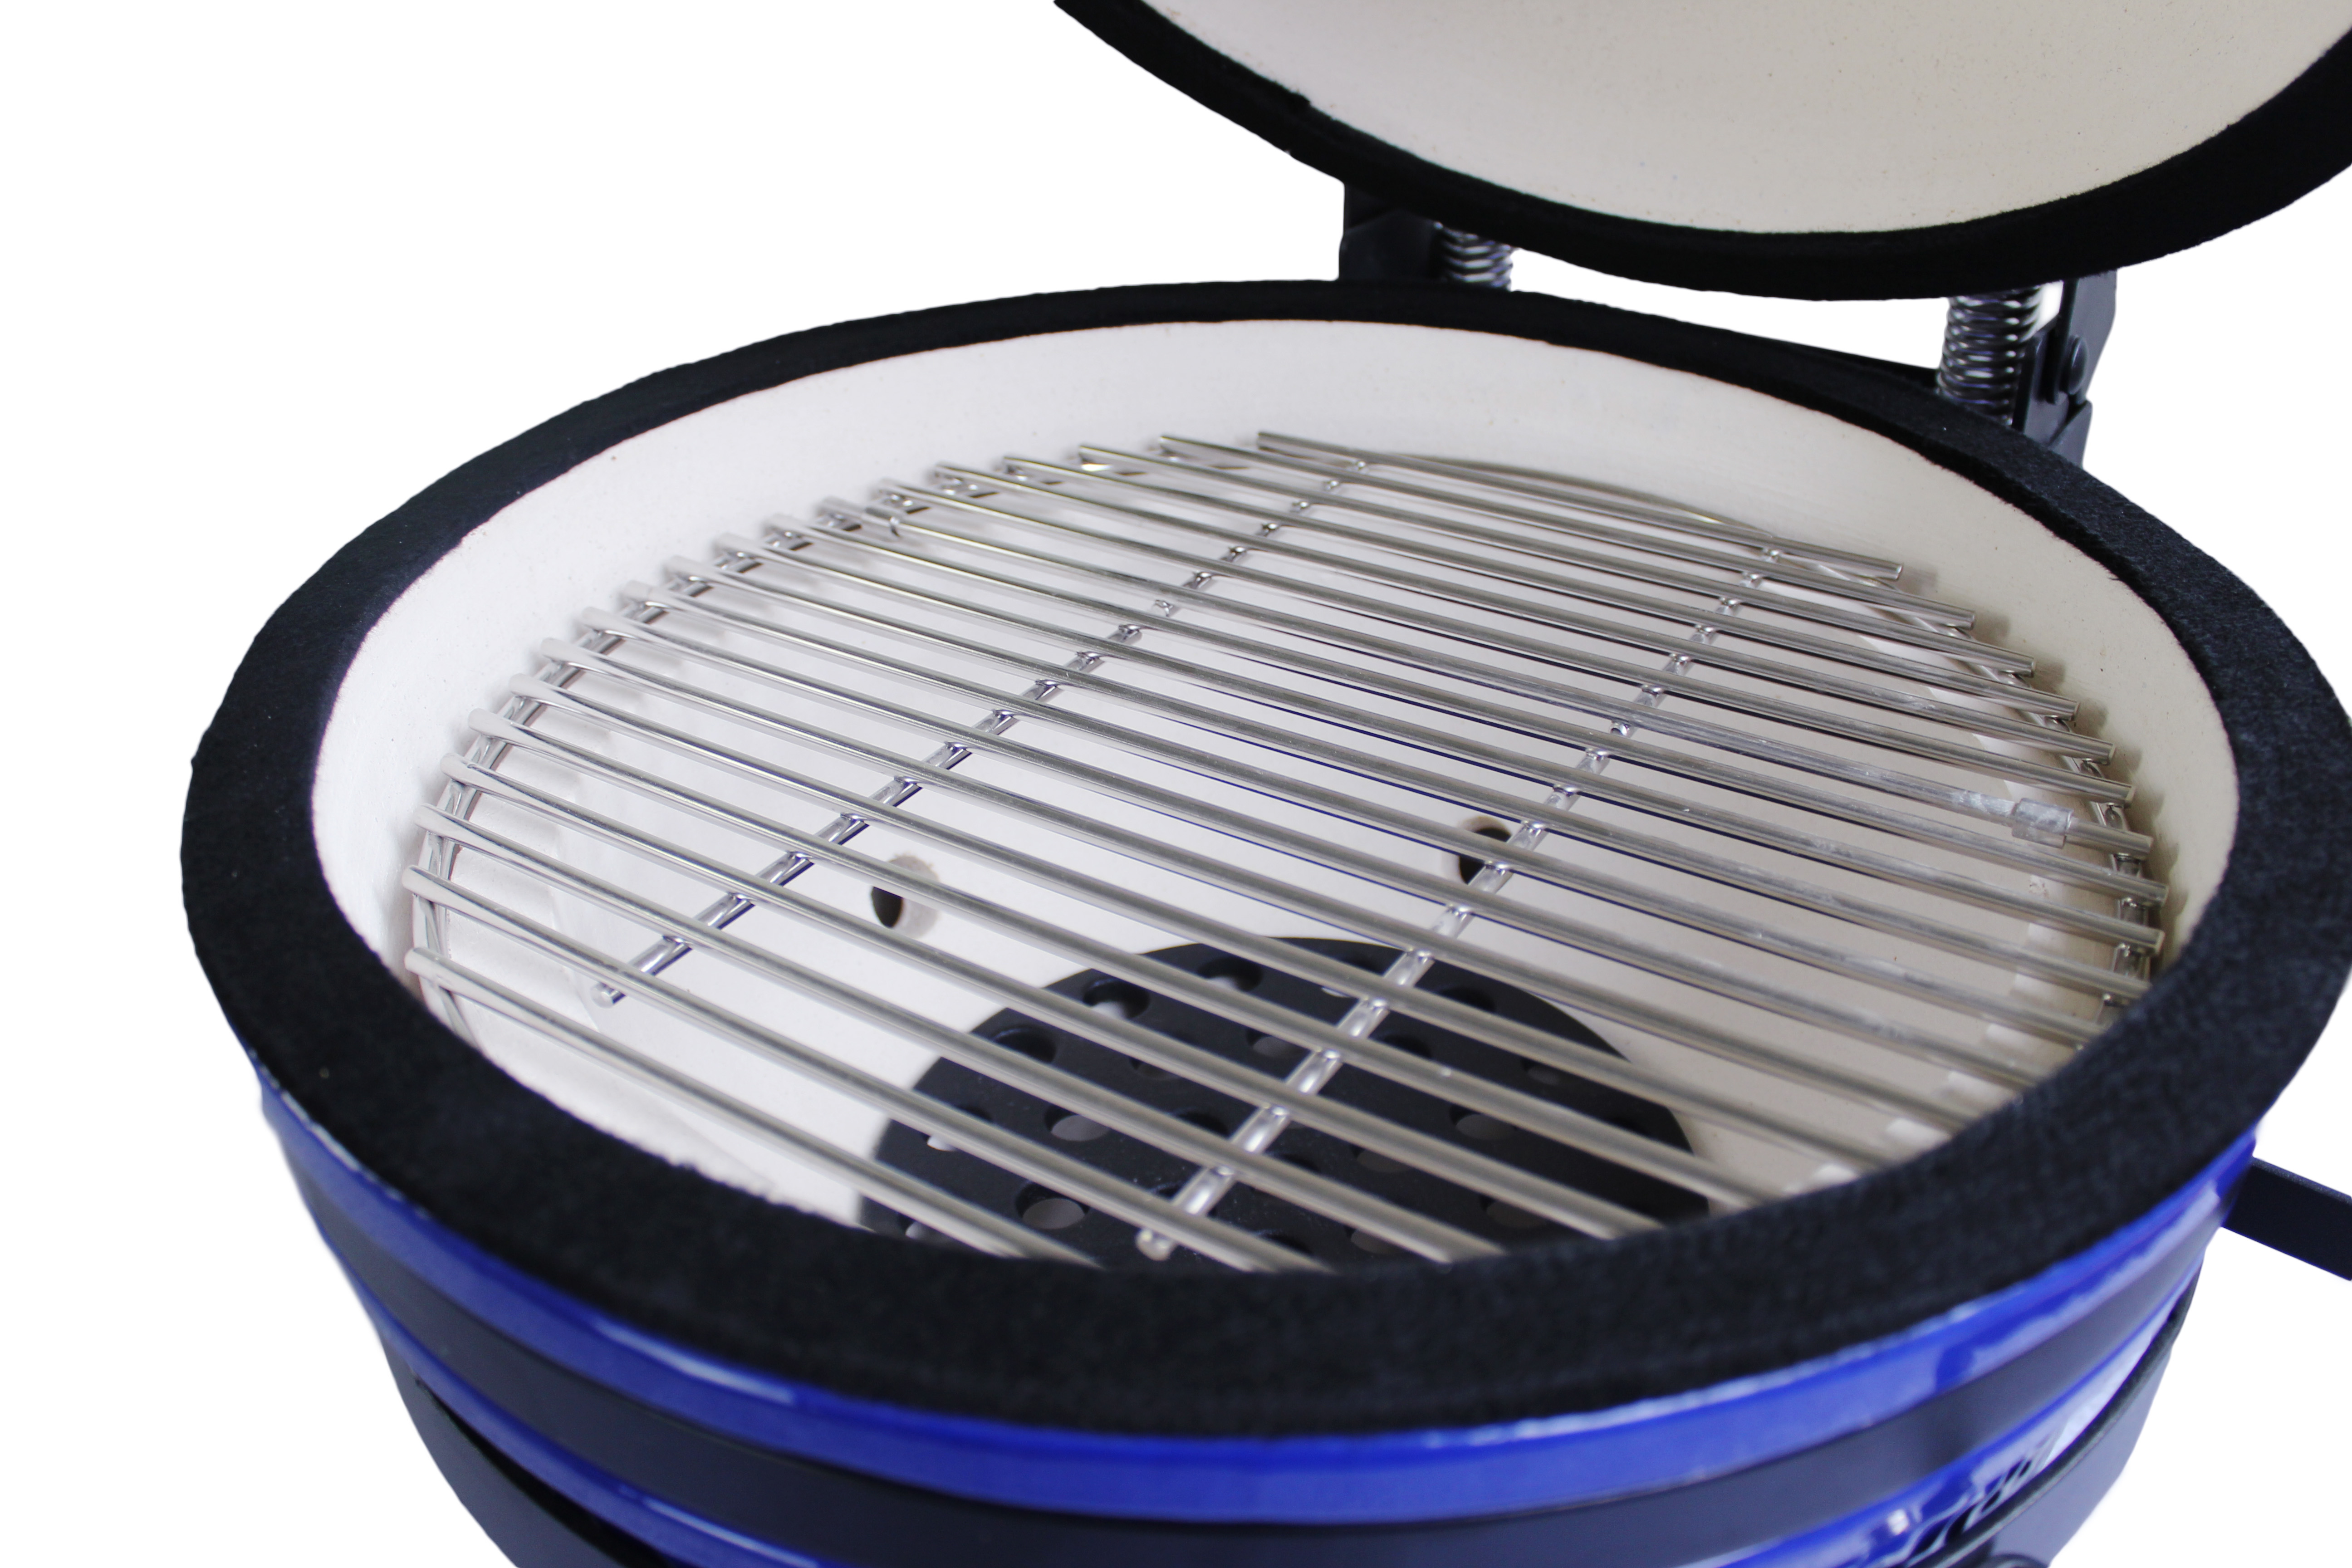 Auplex 16 inch mini size blue ceramic bbq grill Featured Image